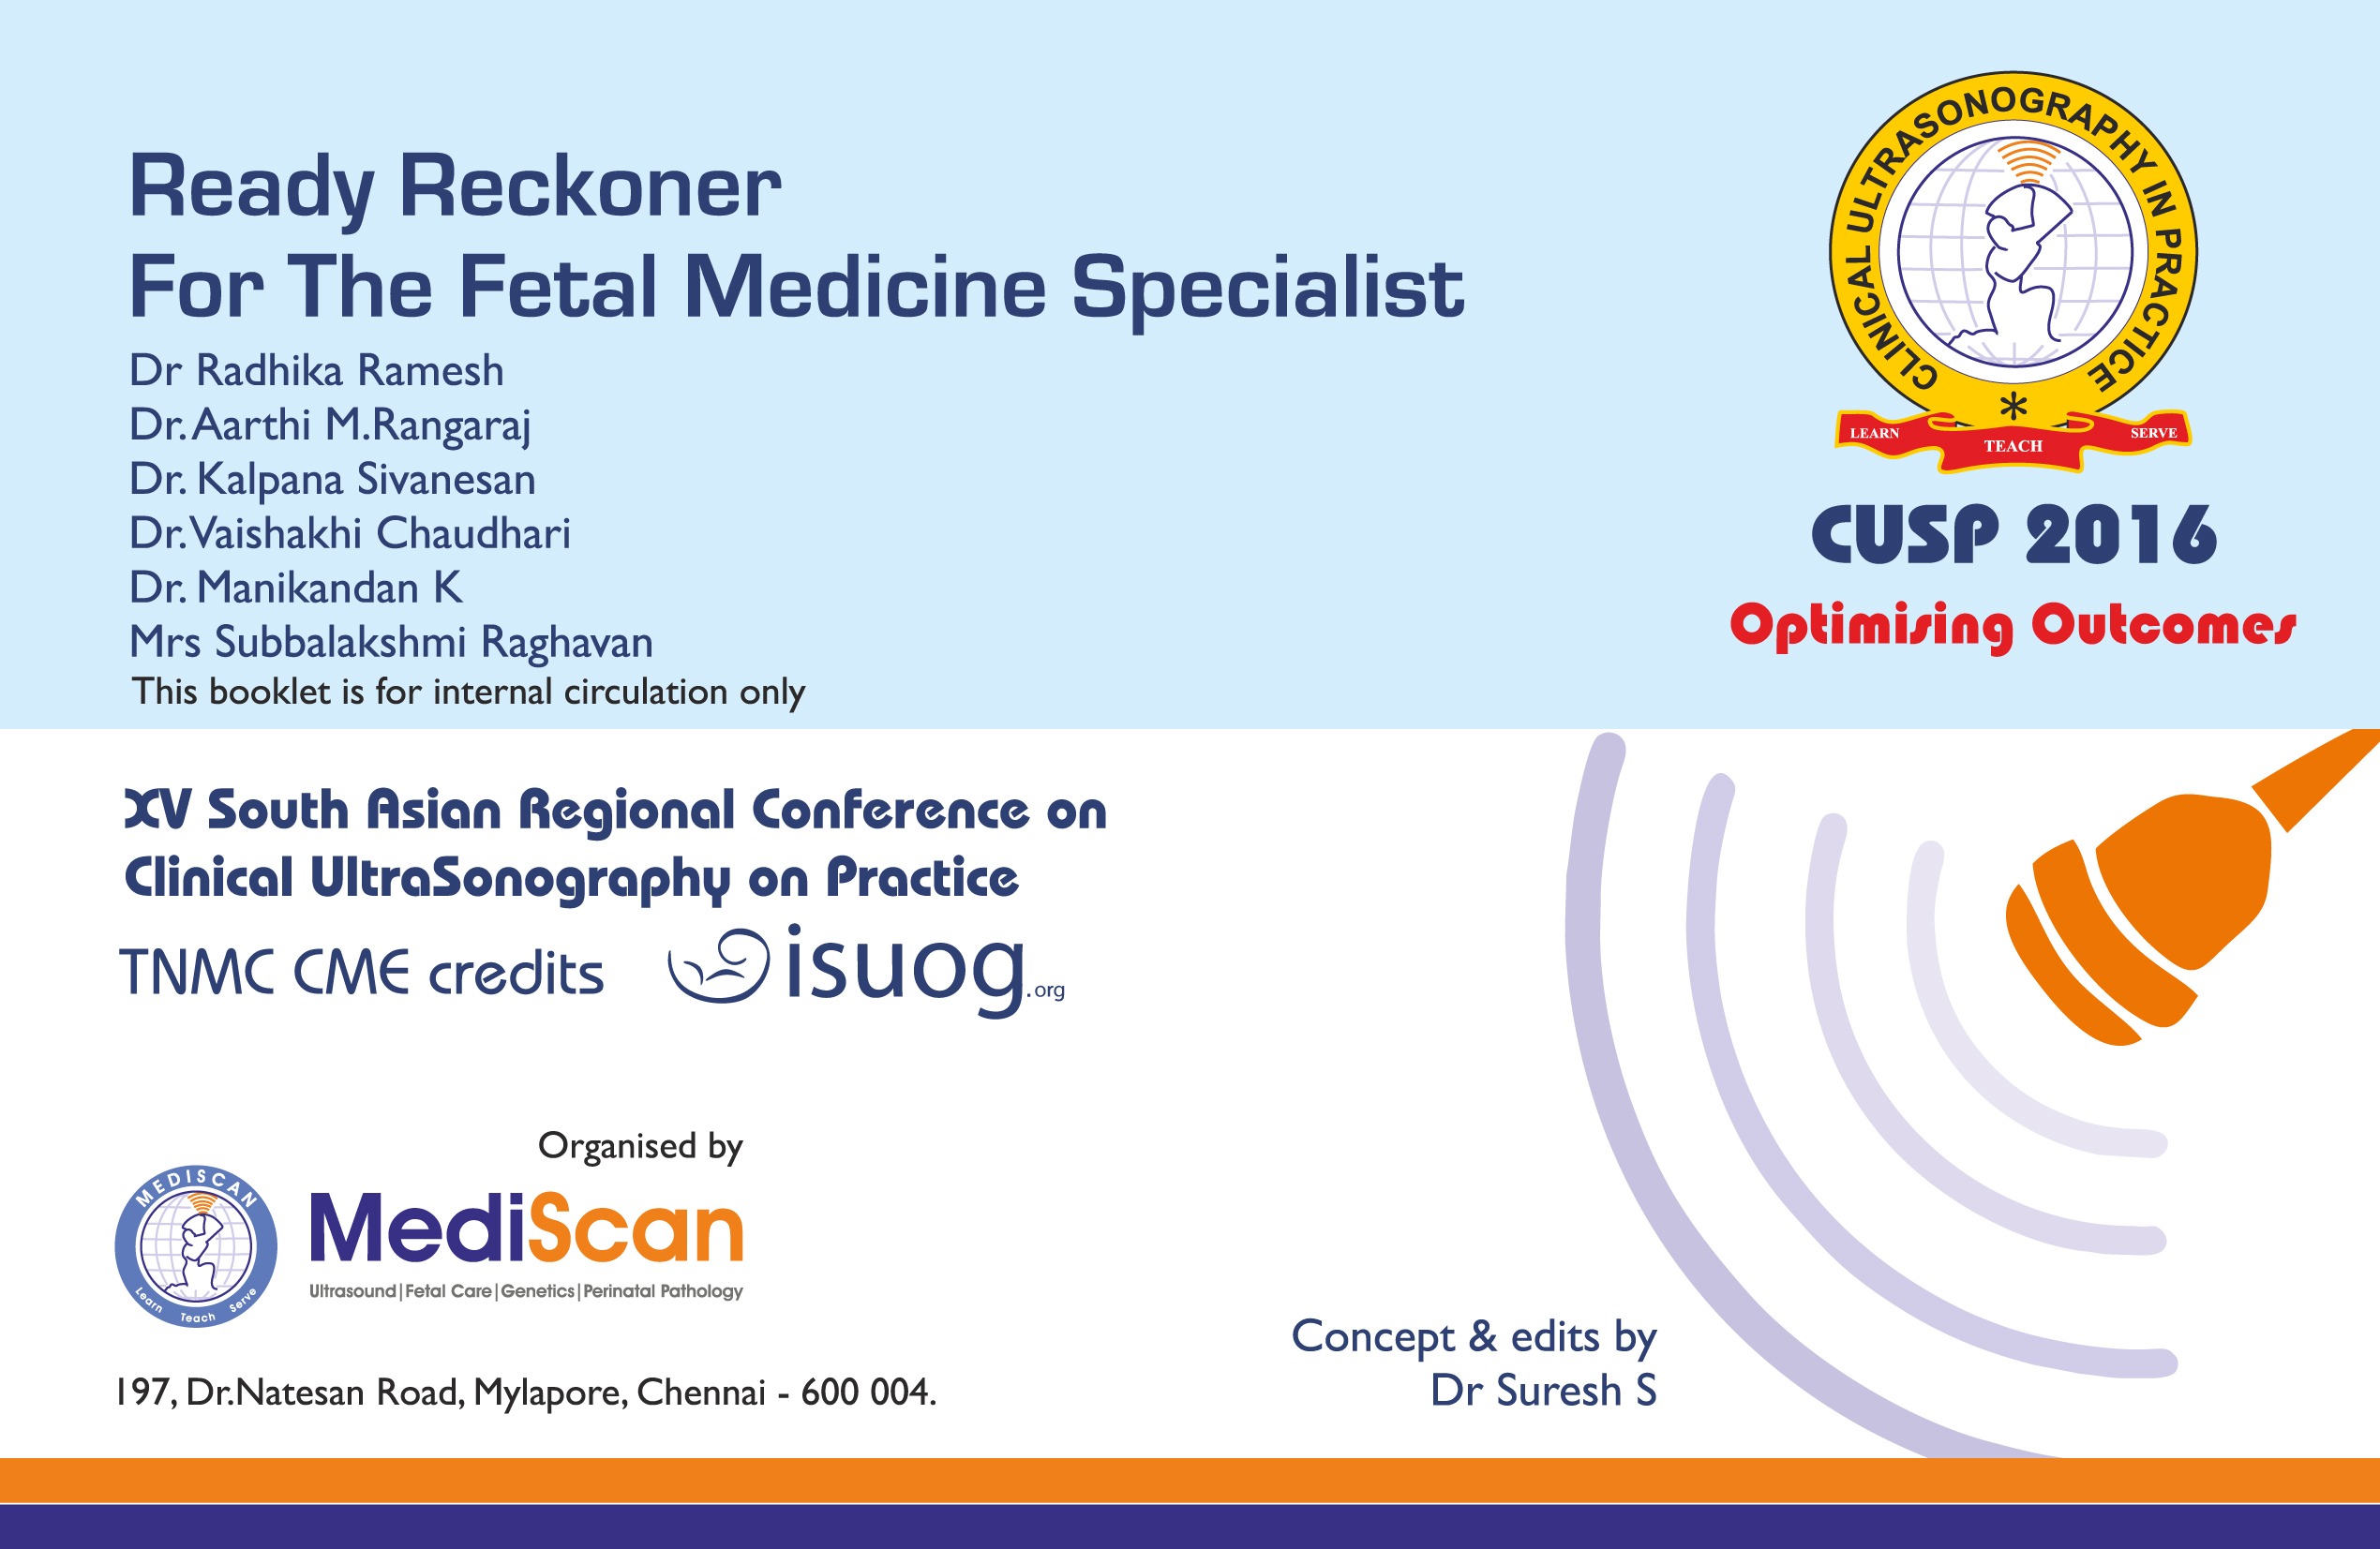 Ready Reckoner for The Fetal Medicine Specialist